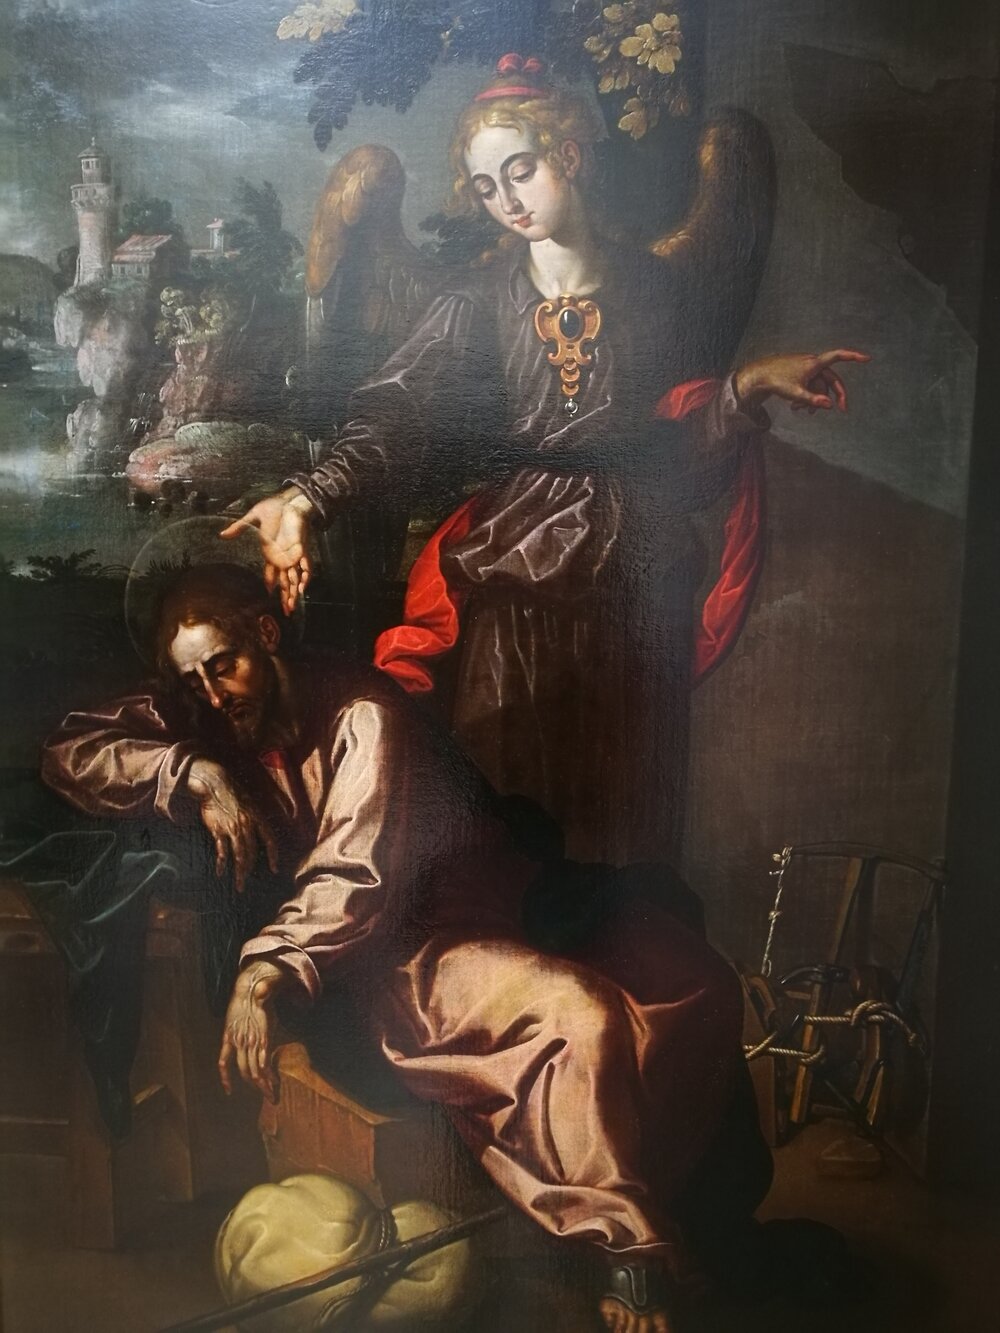 Pacheco's The Dream of Saint Joseph